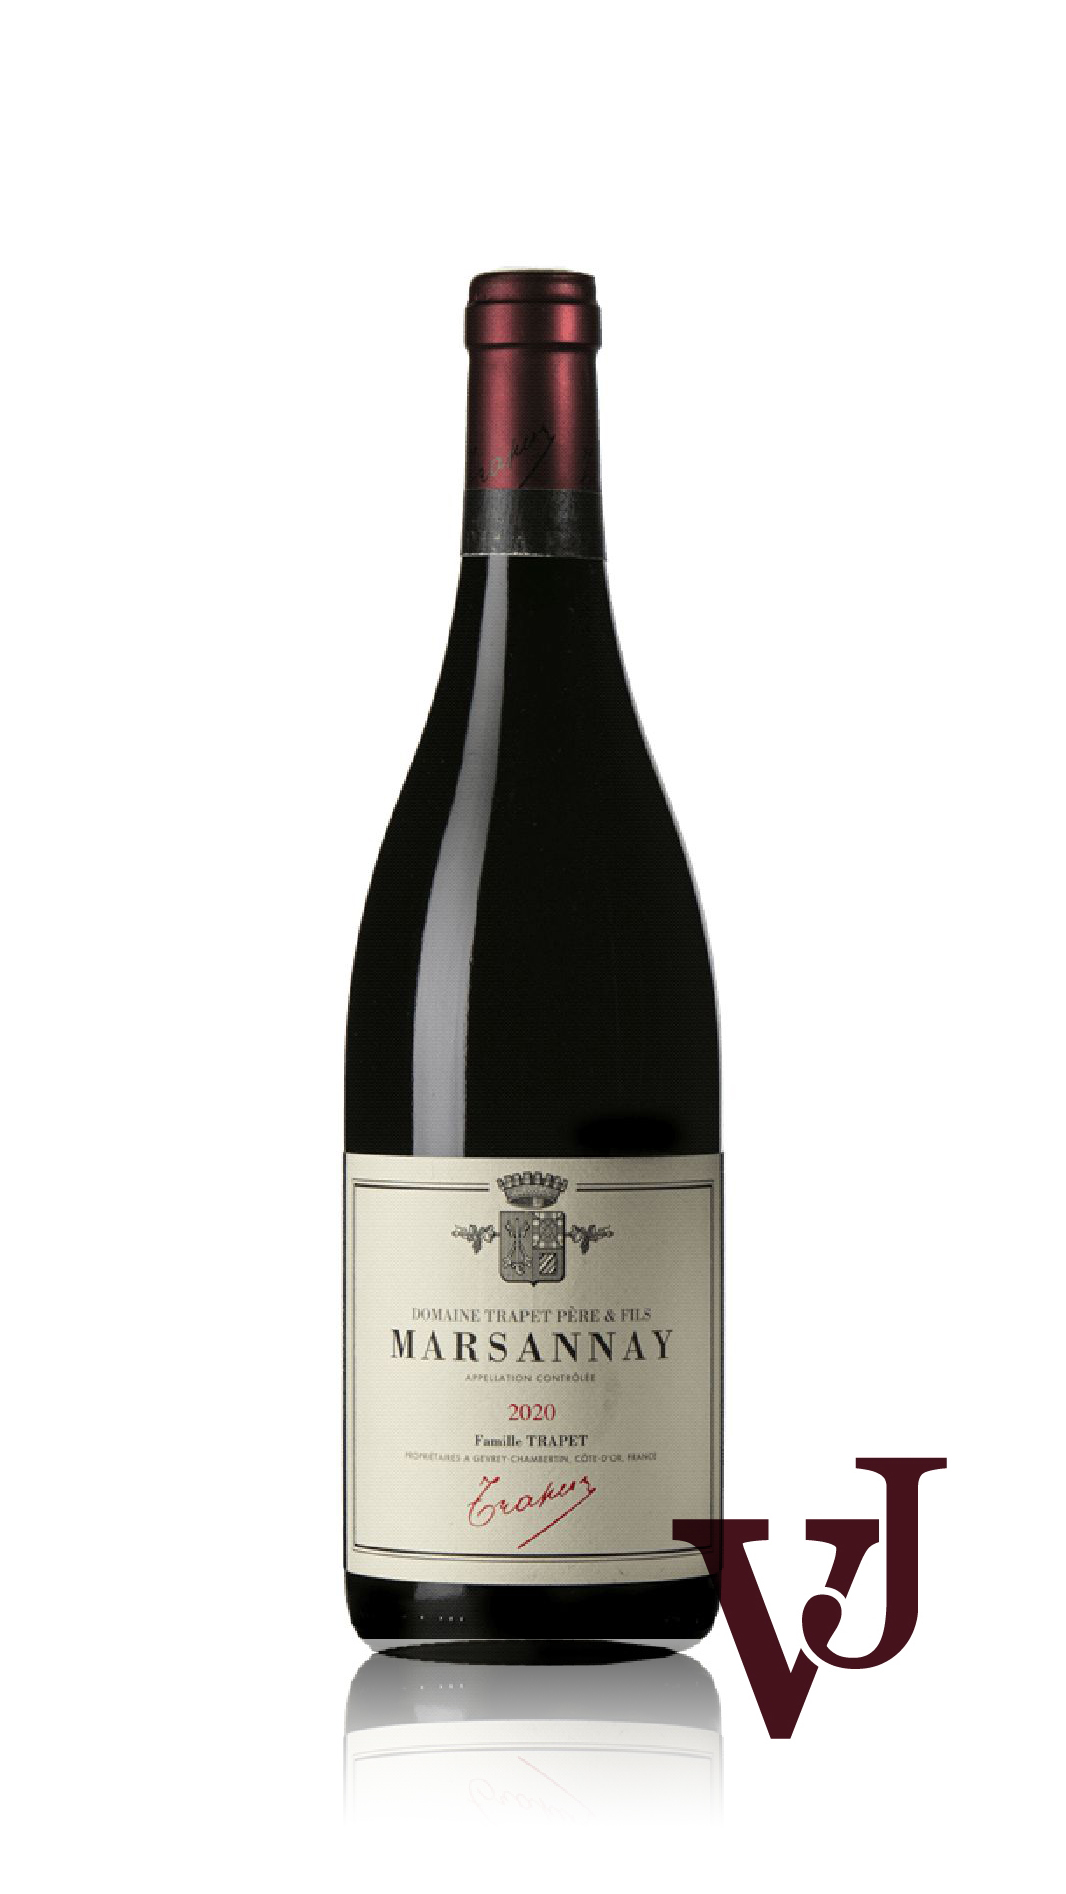 Rött Vin - Marsannay Rouge Domaine Trapet 2020 artikel nummer 9054301 från producenten Domaine Trapet från området Frankrike